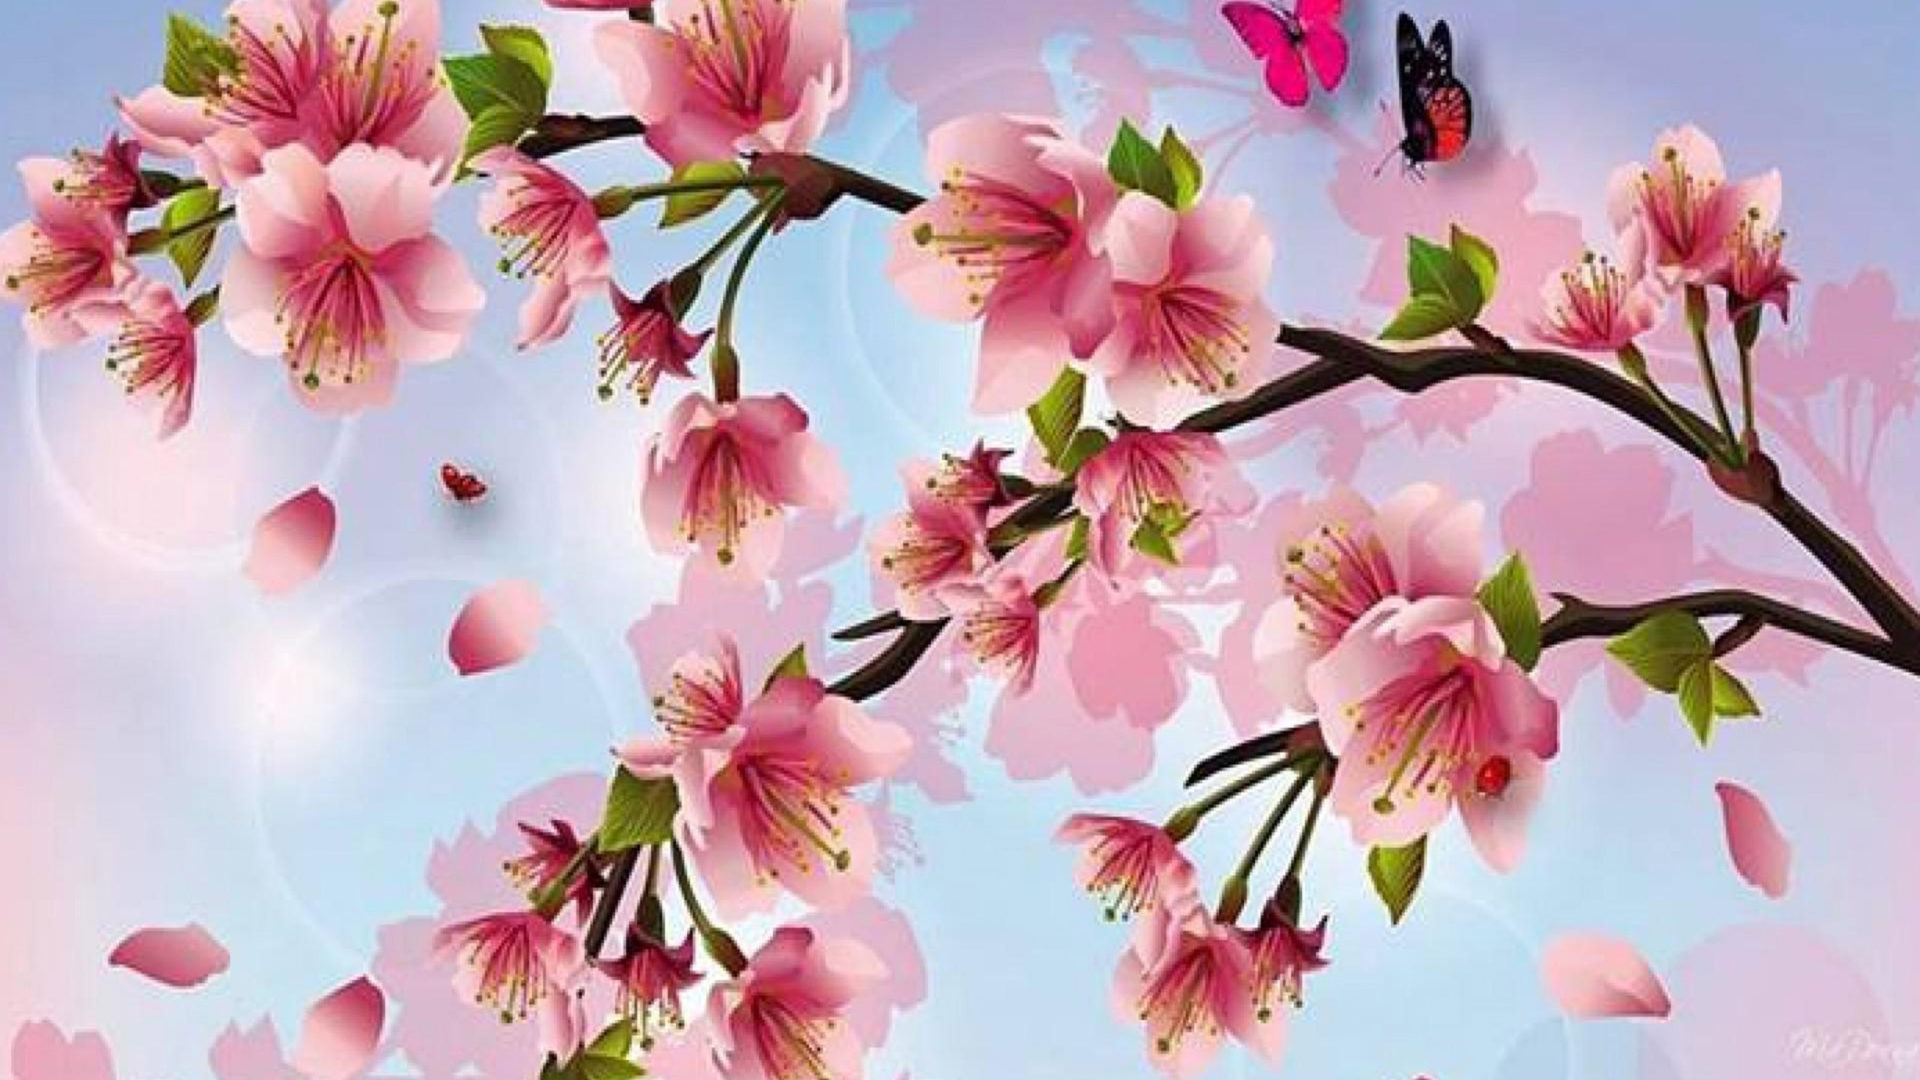 Cherry blossoms painting wallpaper cherry blossom, Wallpaper13.com